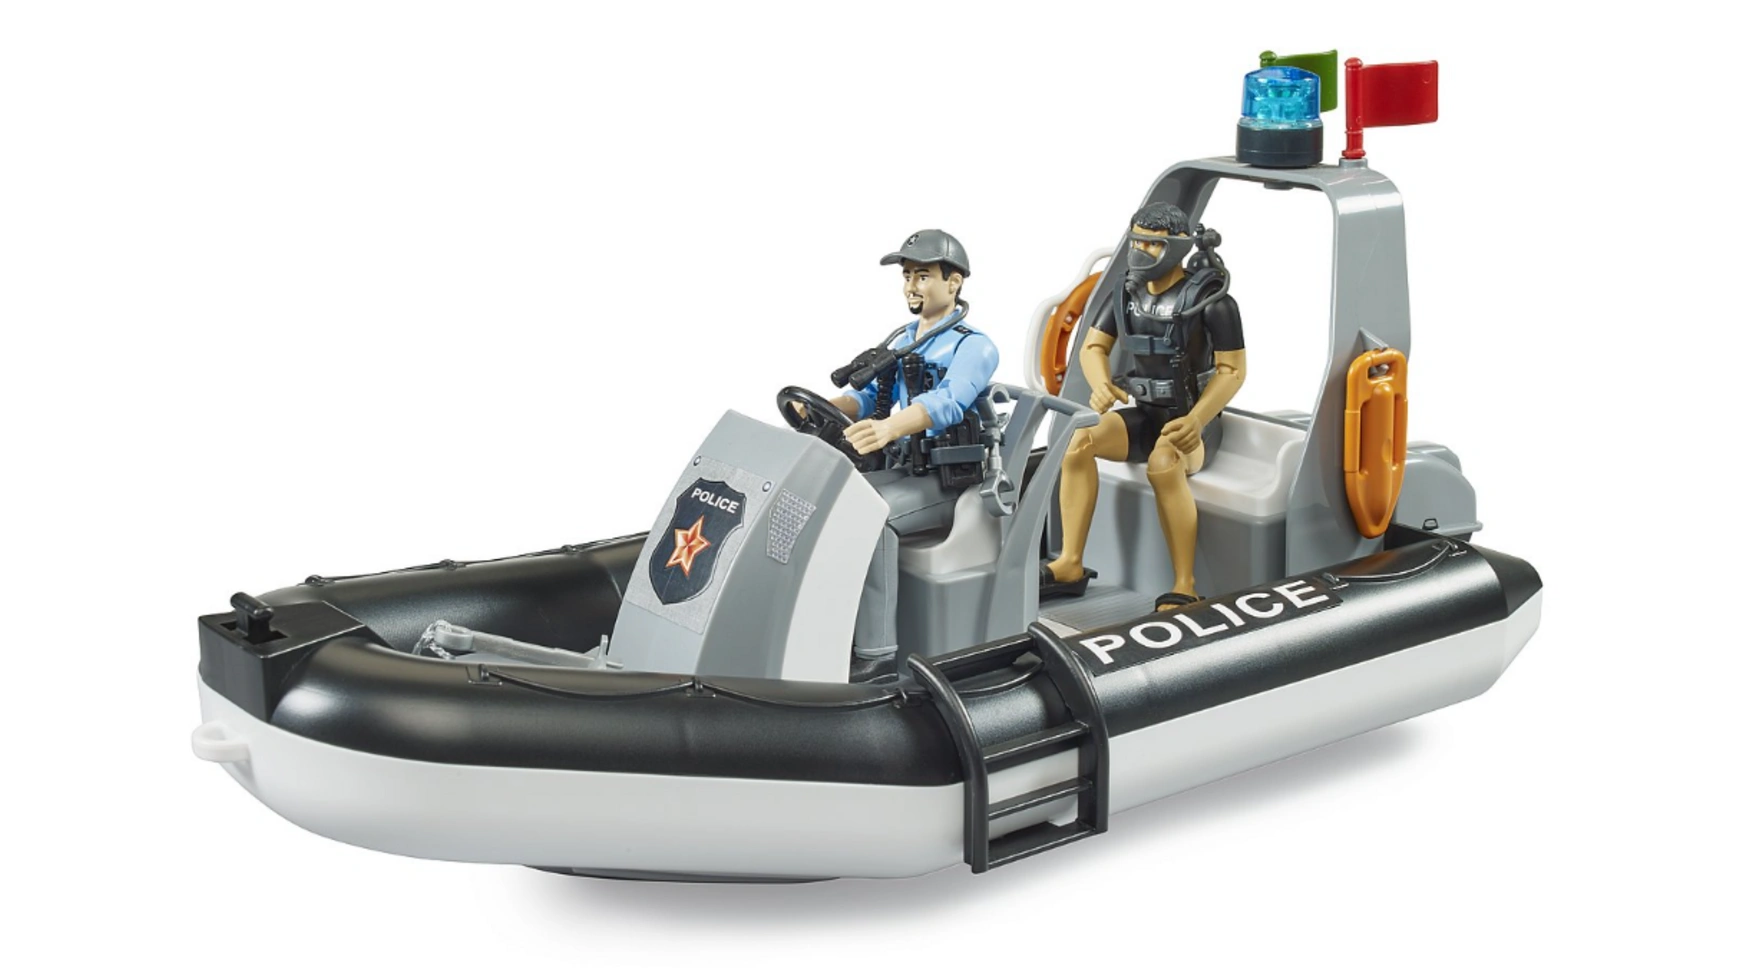 Bruder Надувная лодка bworld Police с полицейским, дайвером и аксессуарами